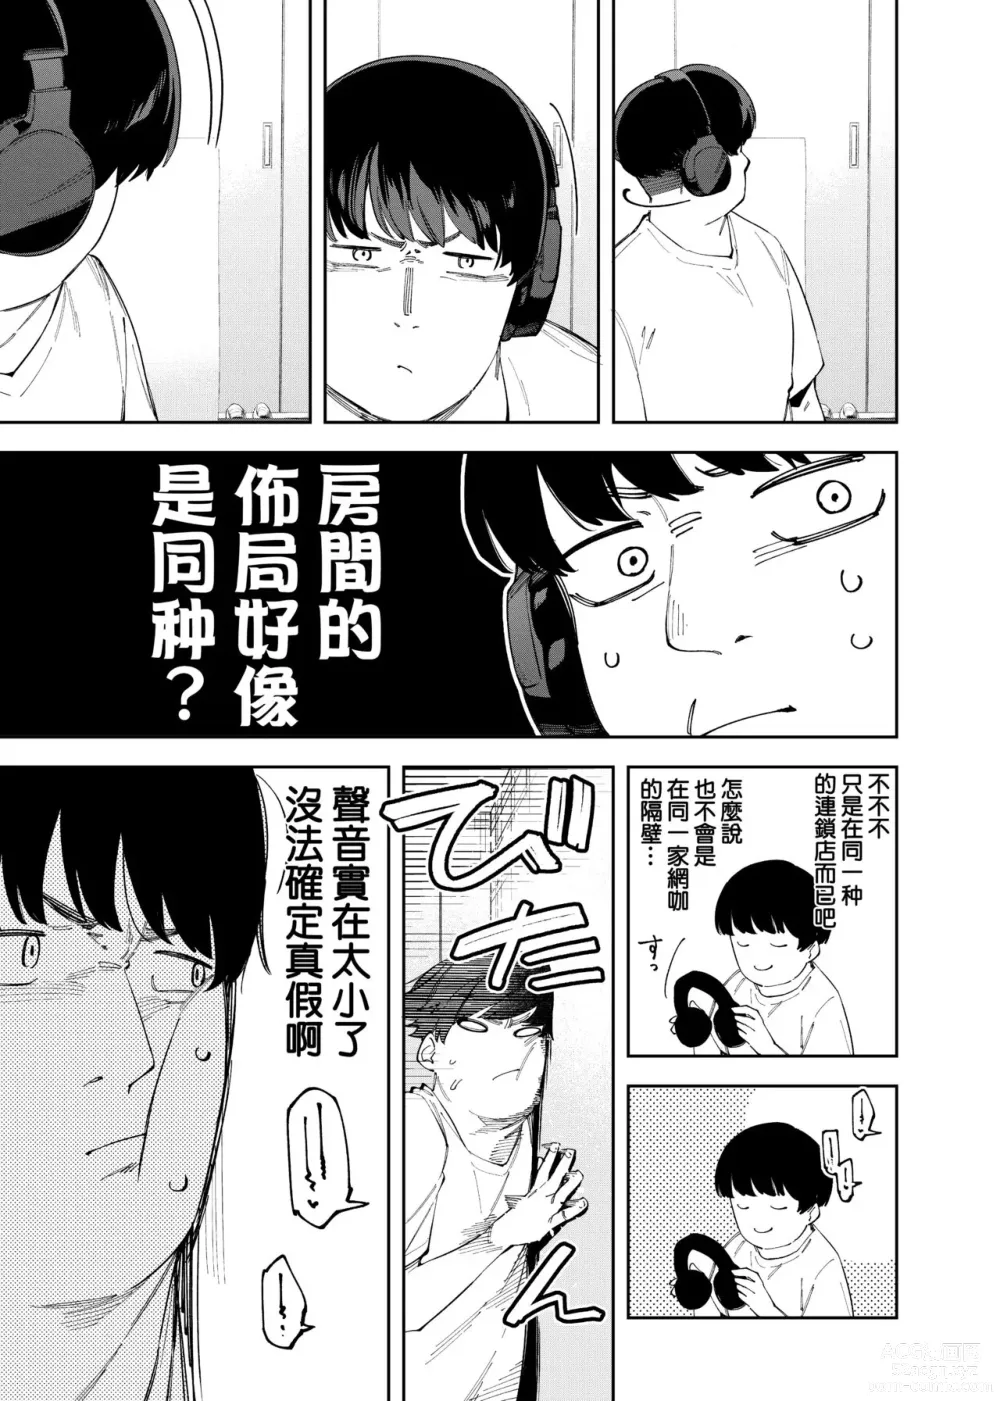 Page 9 of manga rinzin ha yuumei haisin sya4 nin me